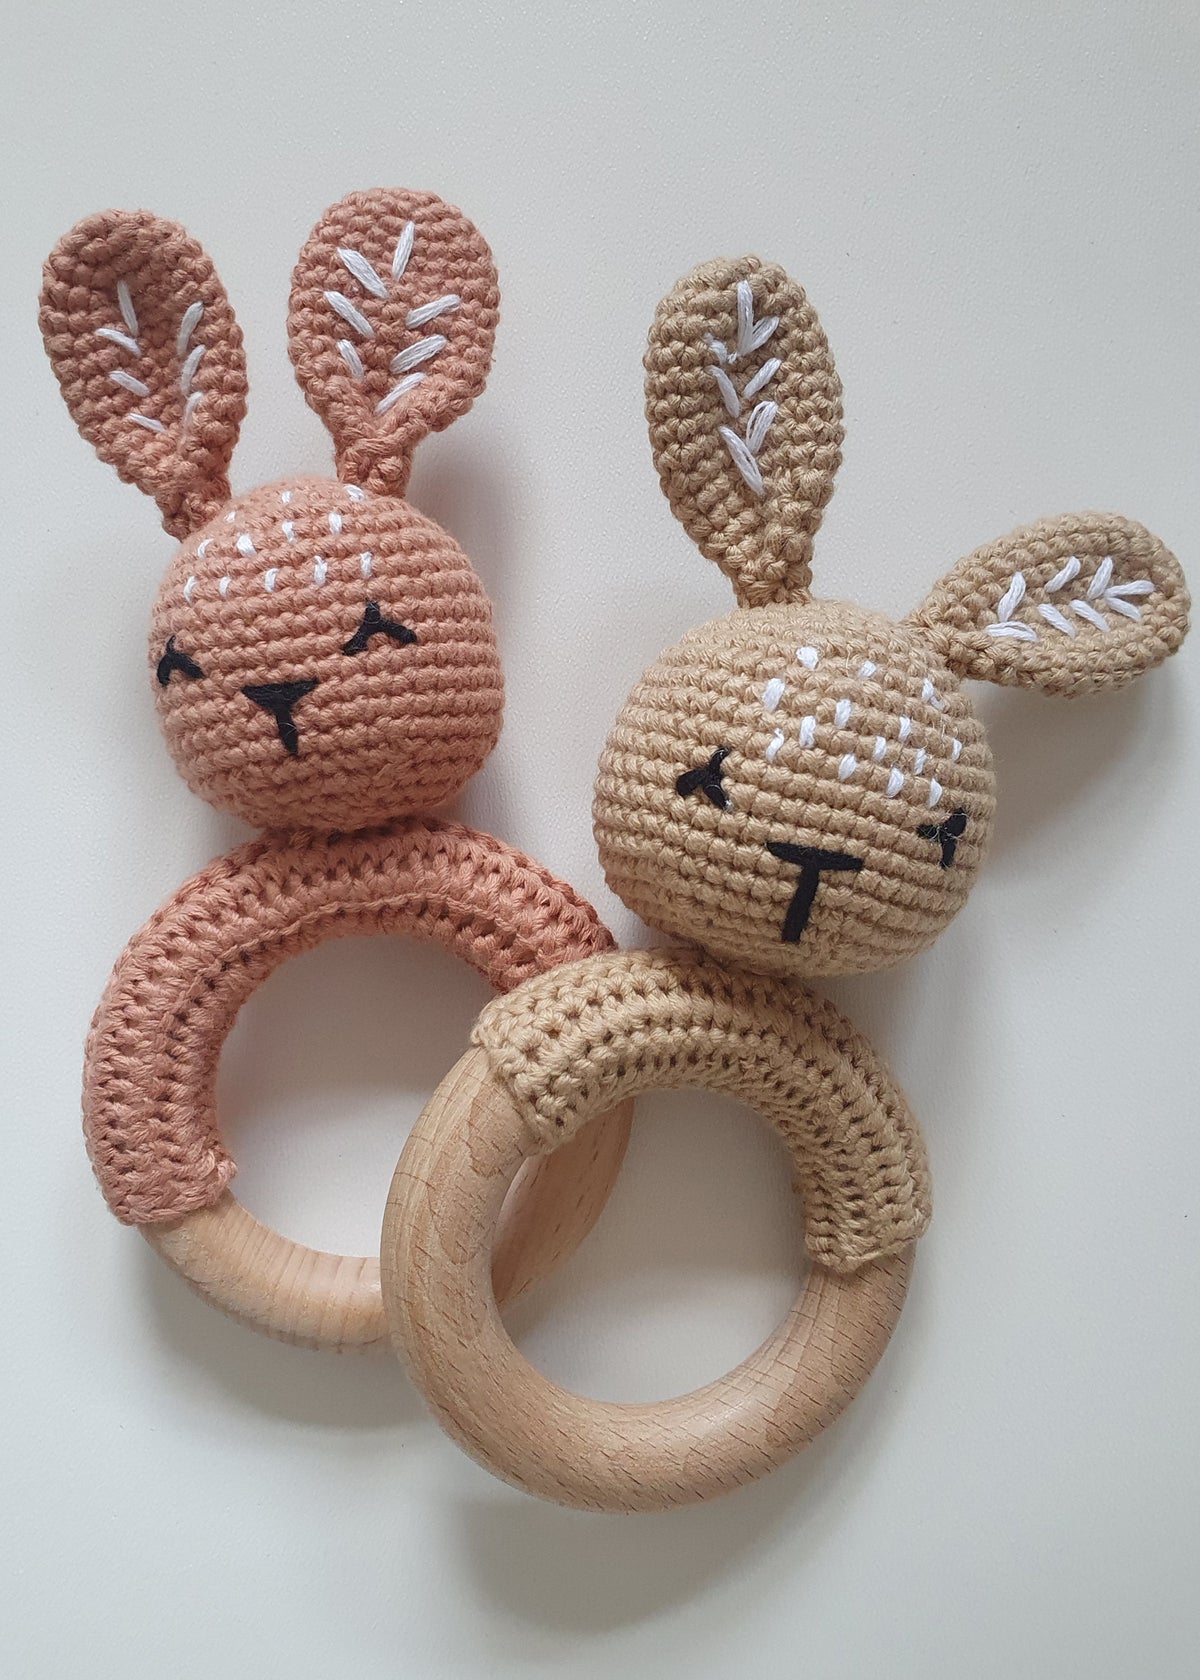 Two Wooden Crochet Baby Rattles